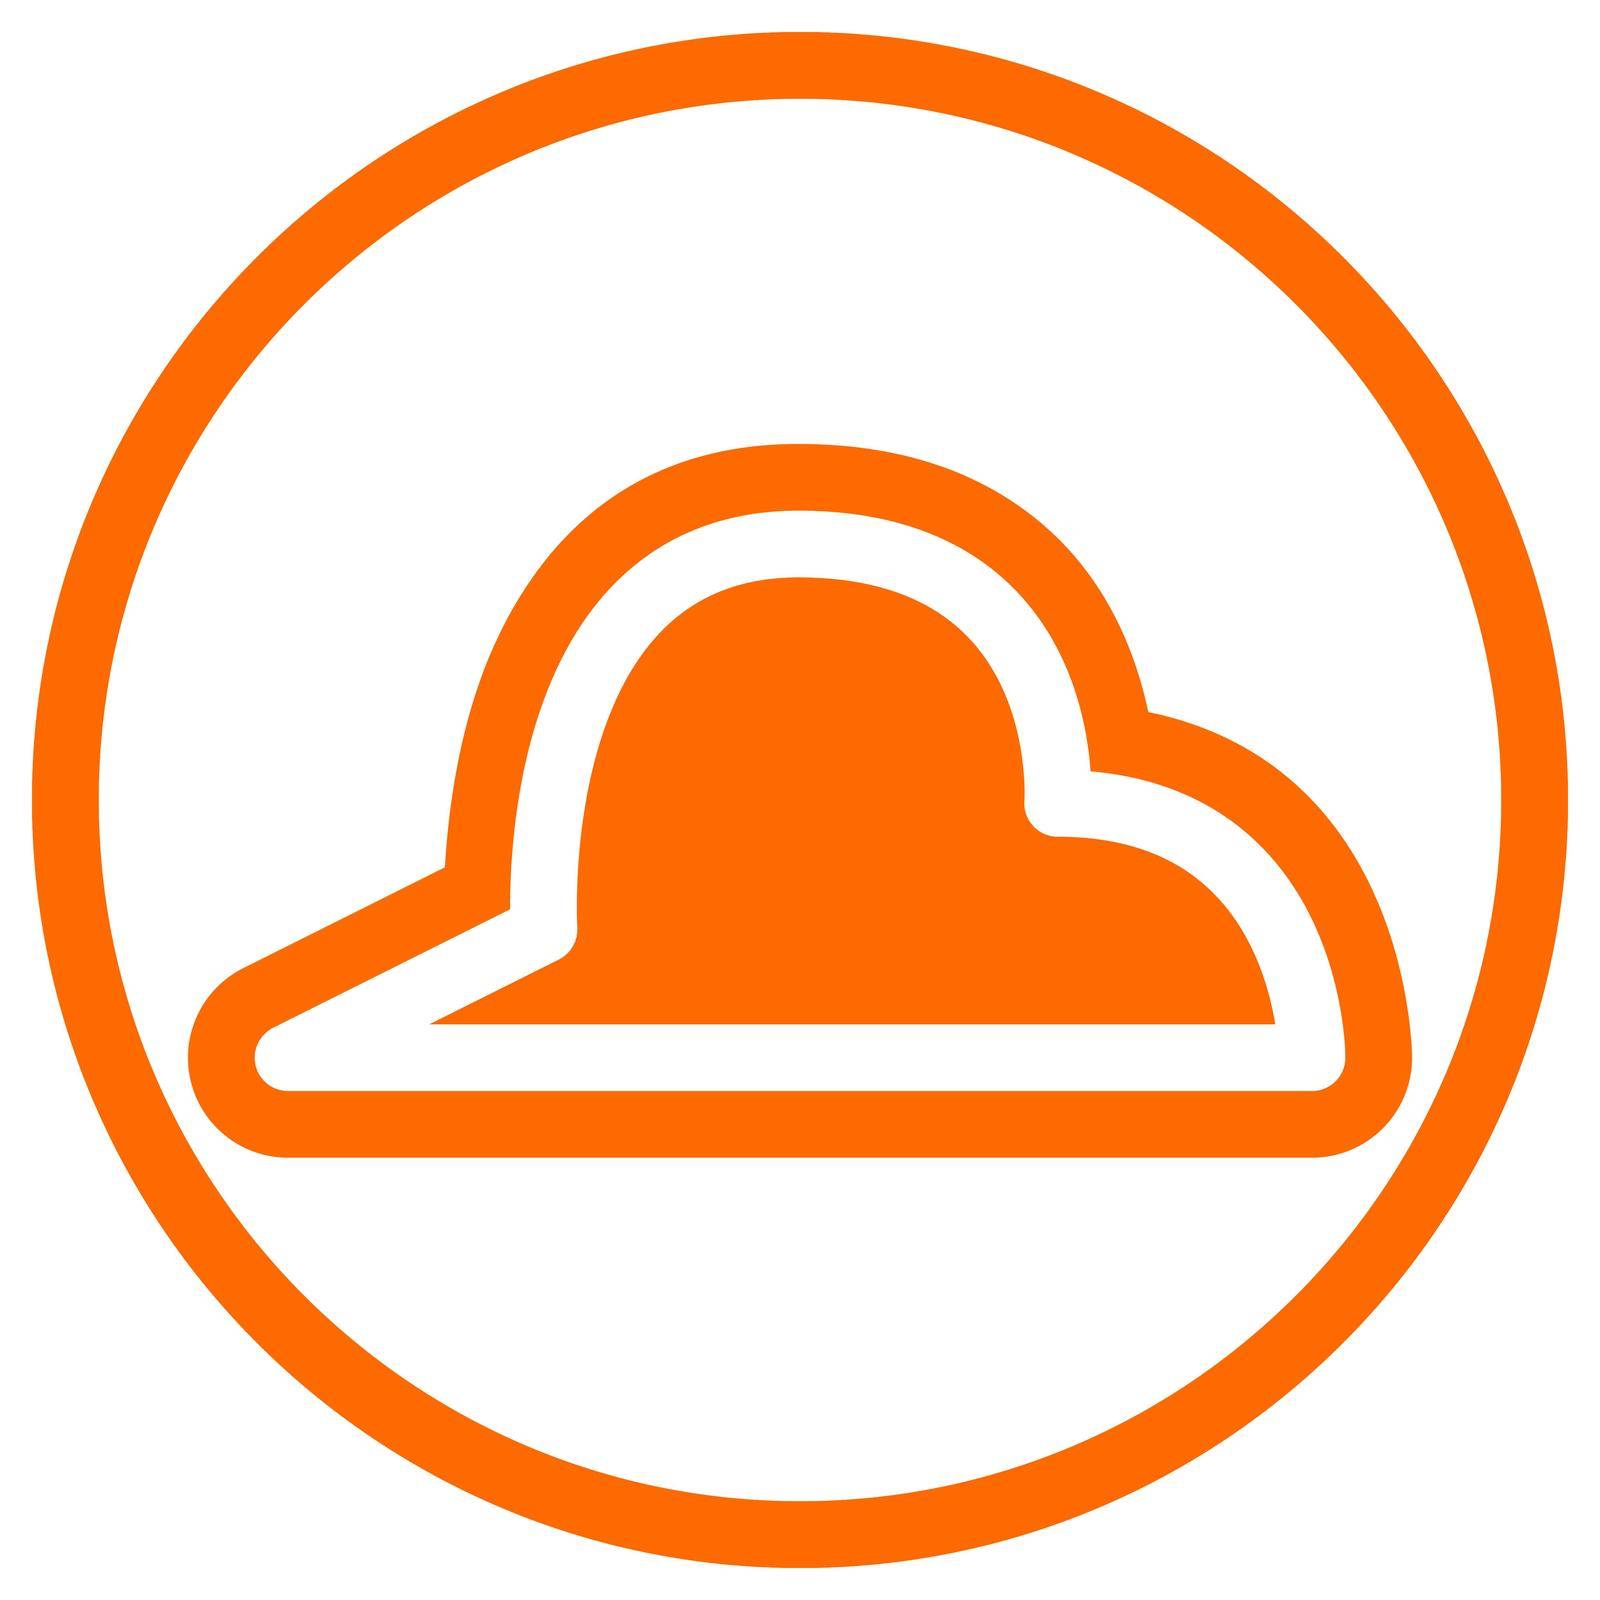 Sharp cloud icon in flat design 03 by skrethsrk